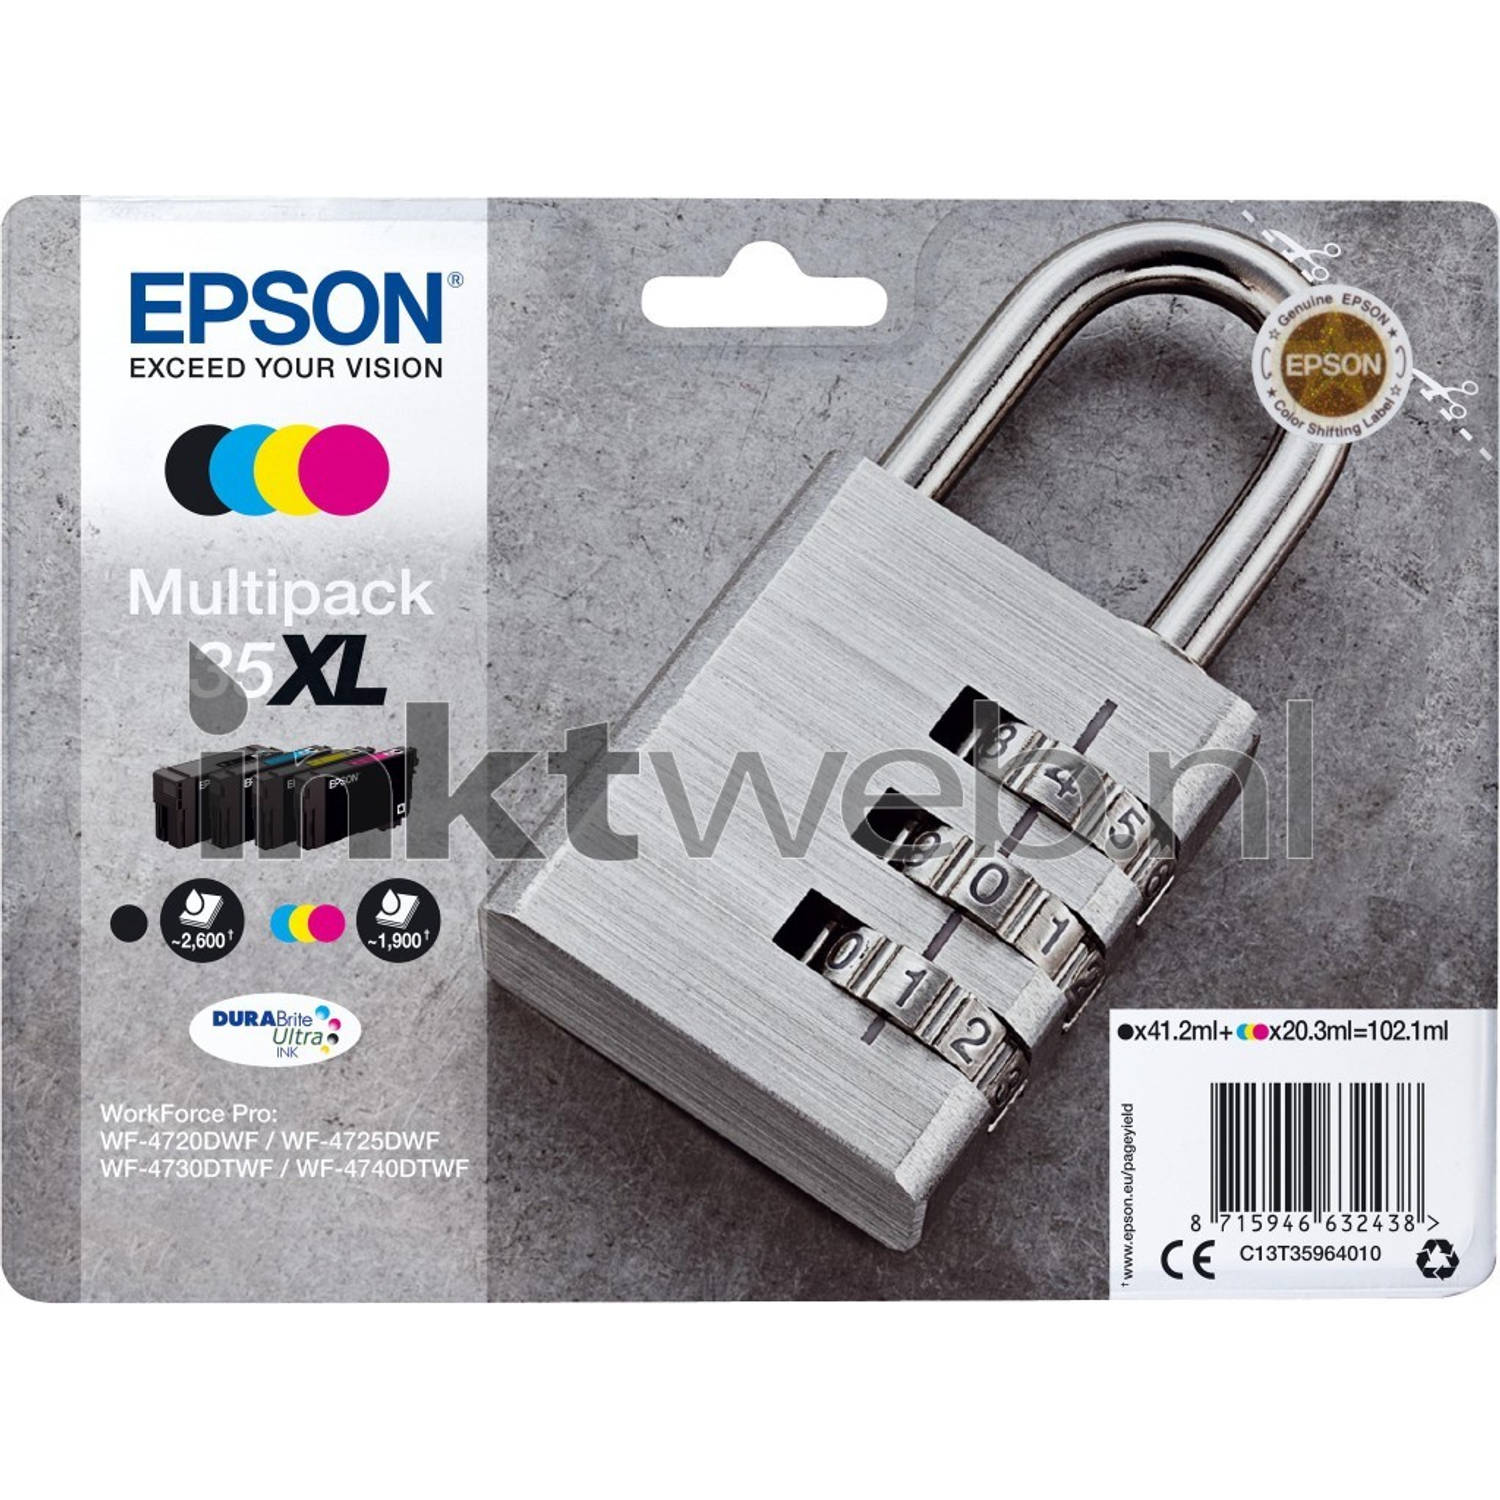 Epson 35XL multipack zwart en kleur cartridge